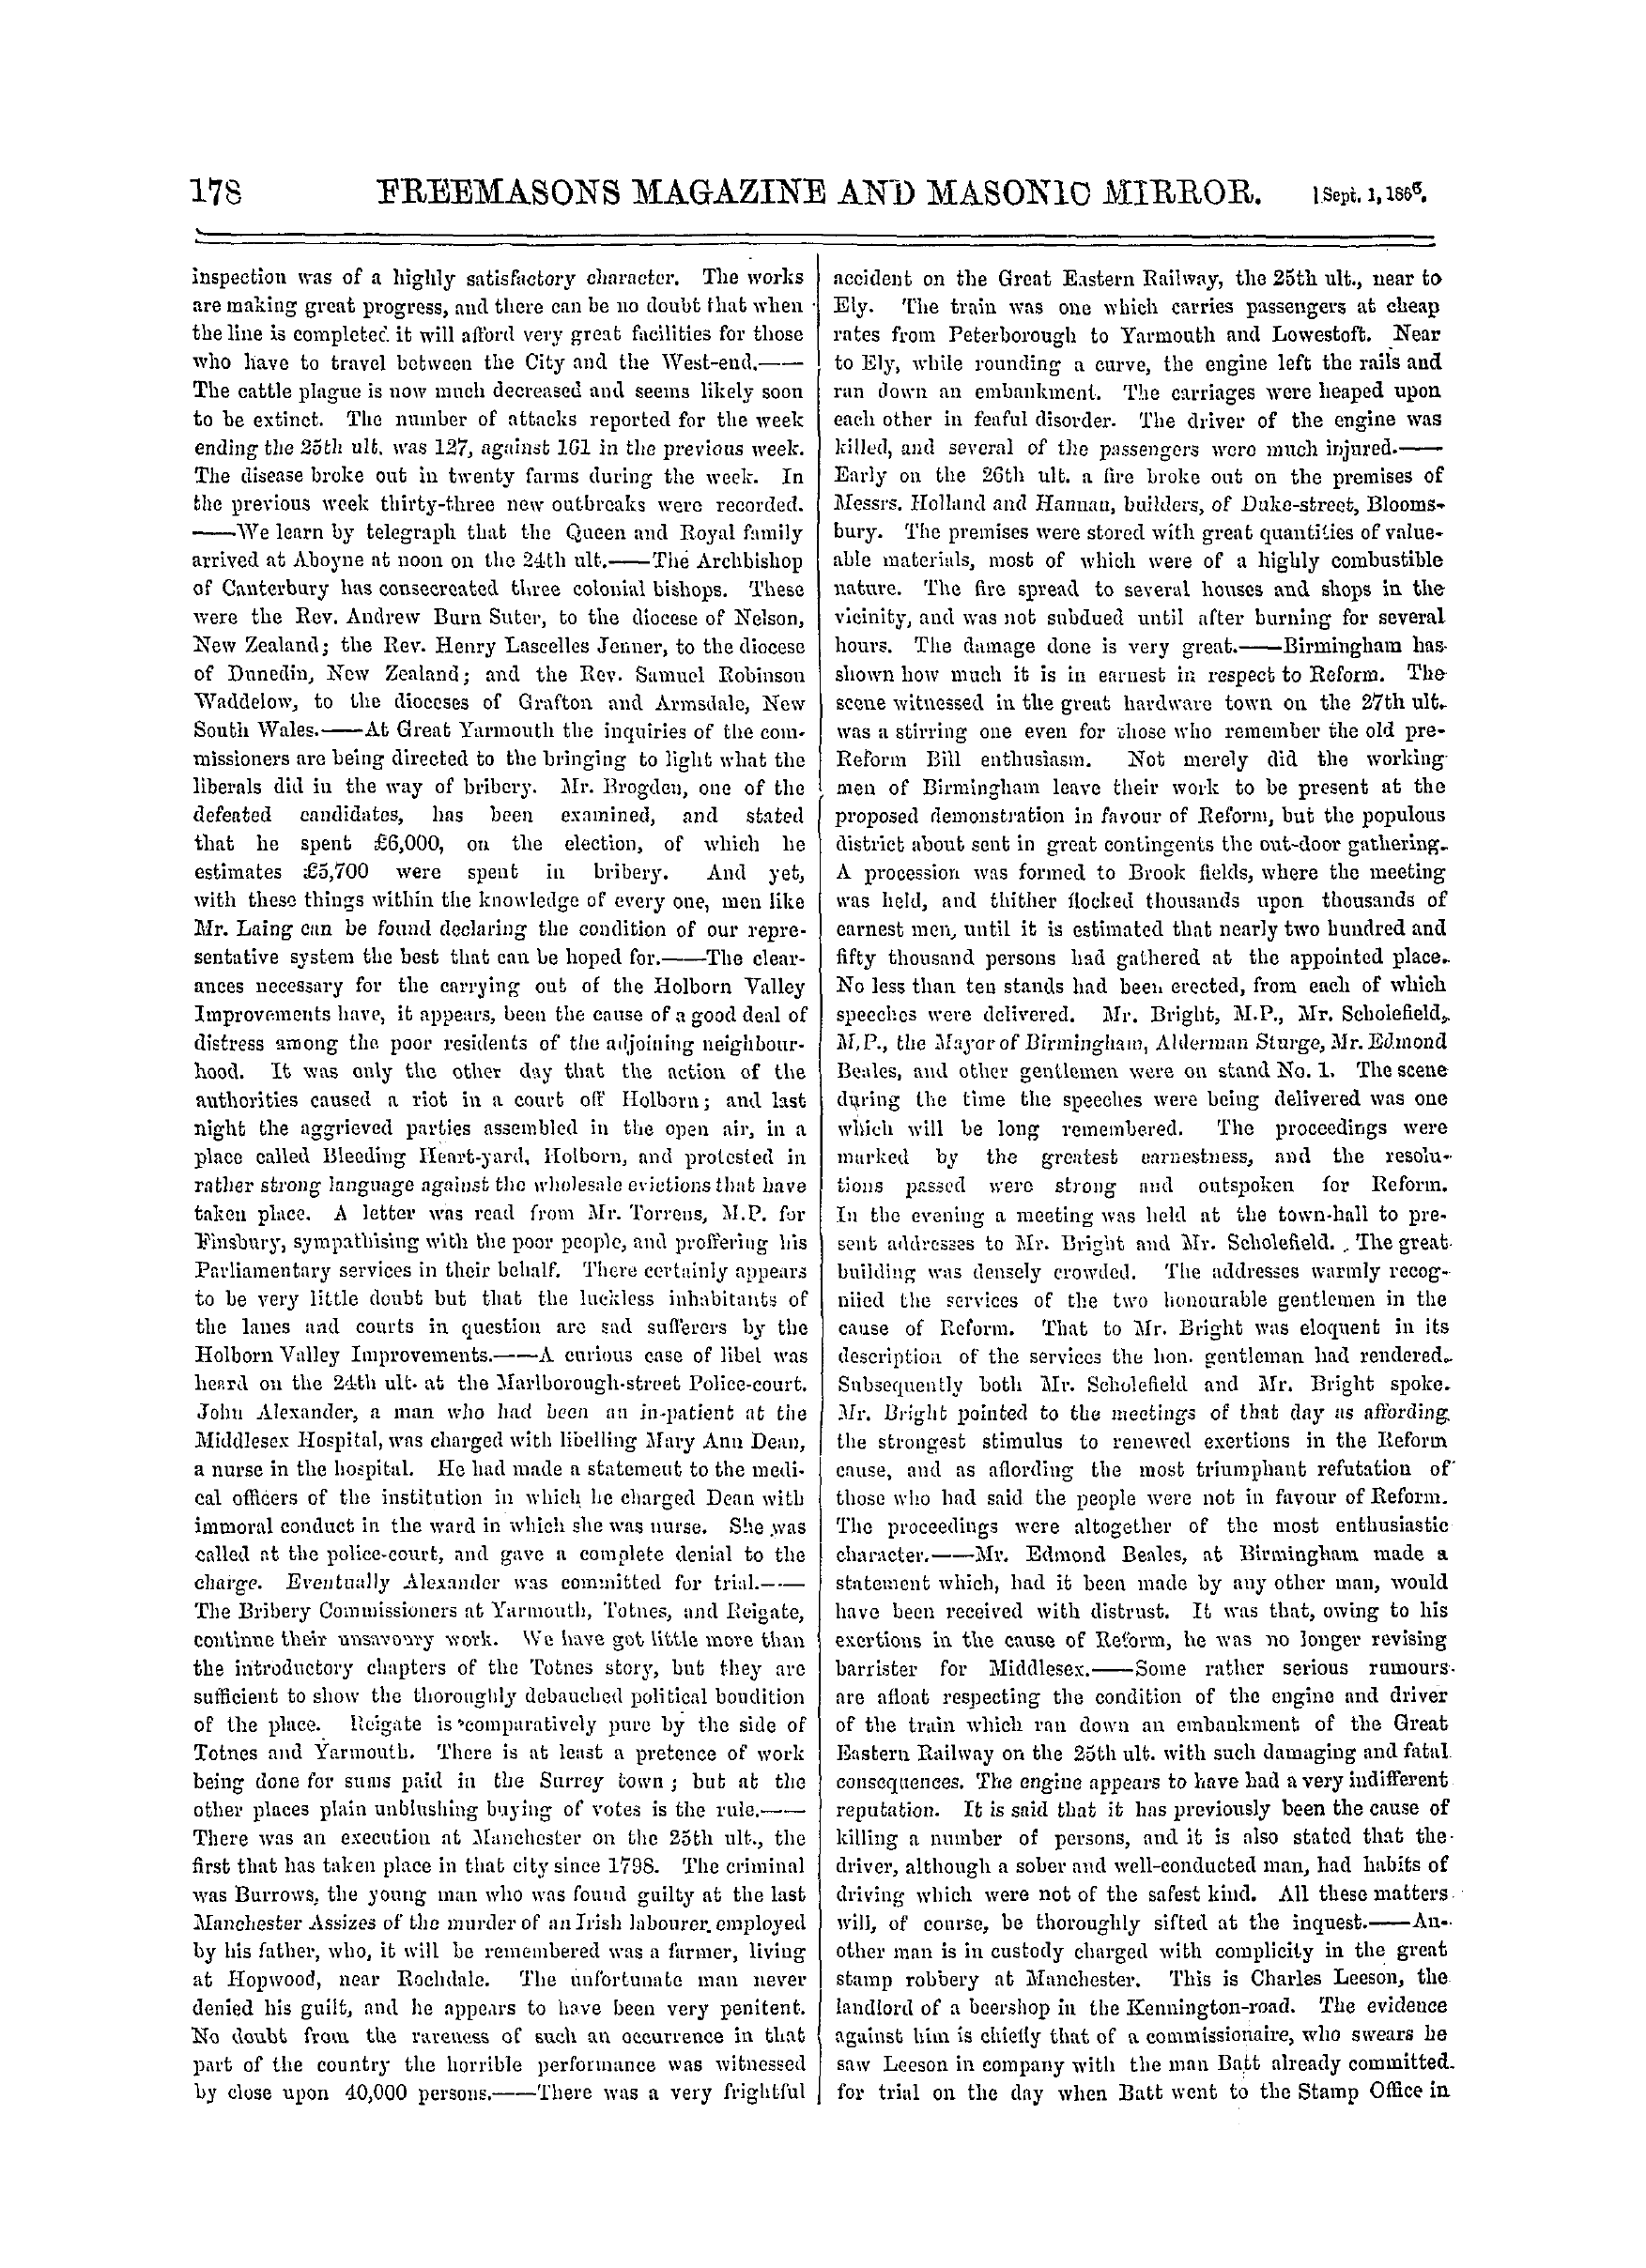 The Freemasons' Monthly Magazine: 1866-09-01 - The Week.